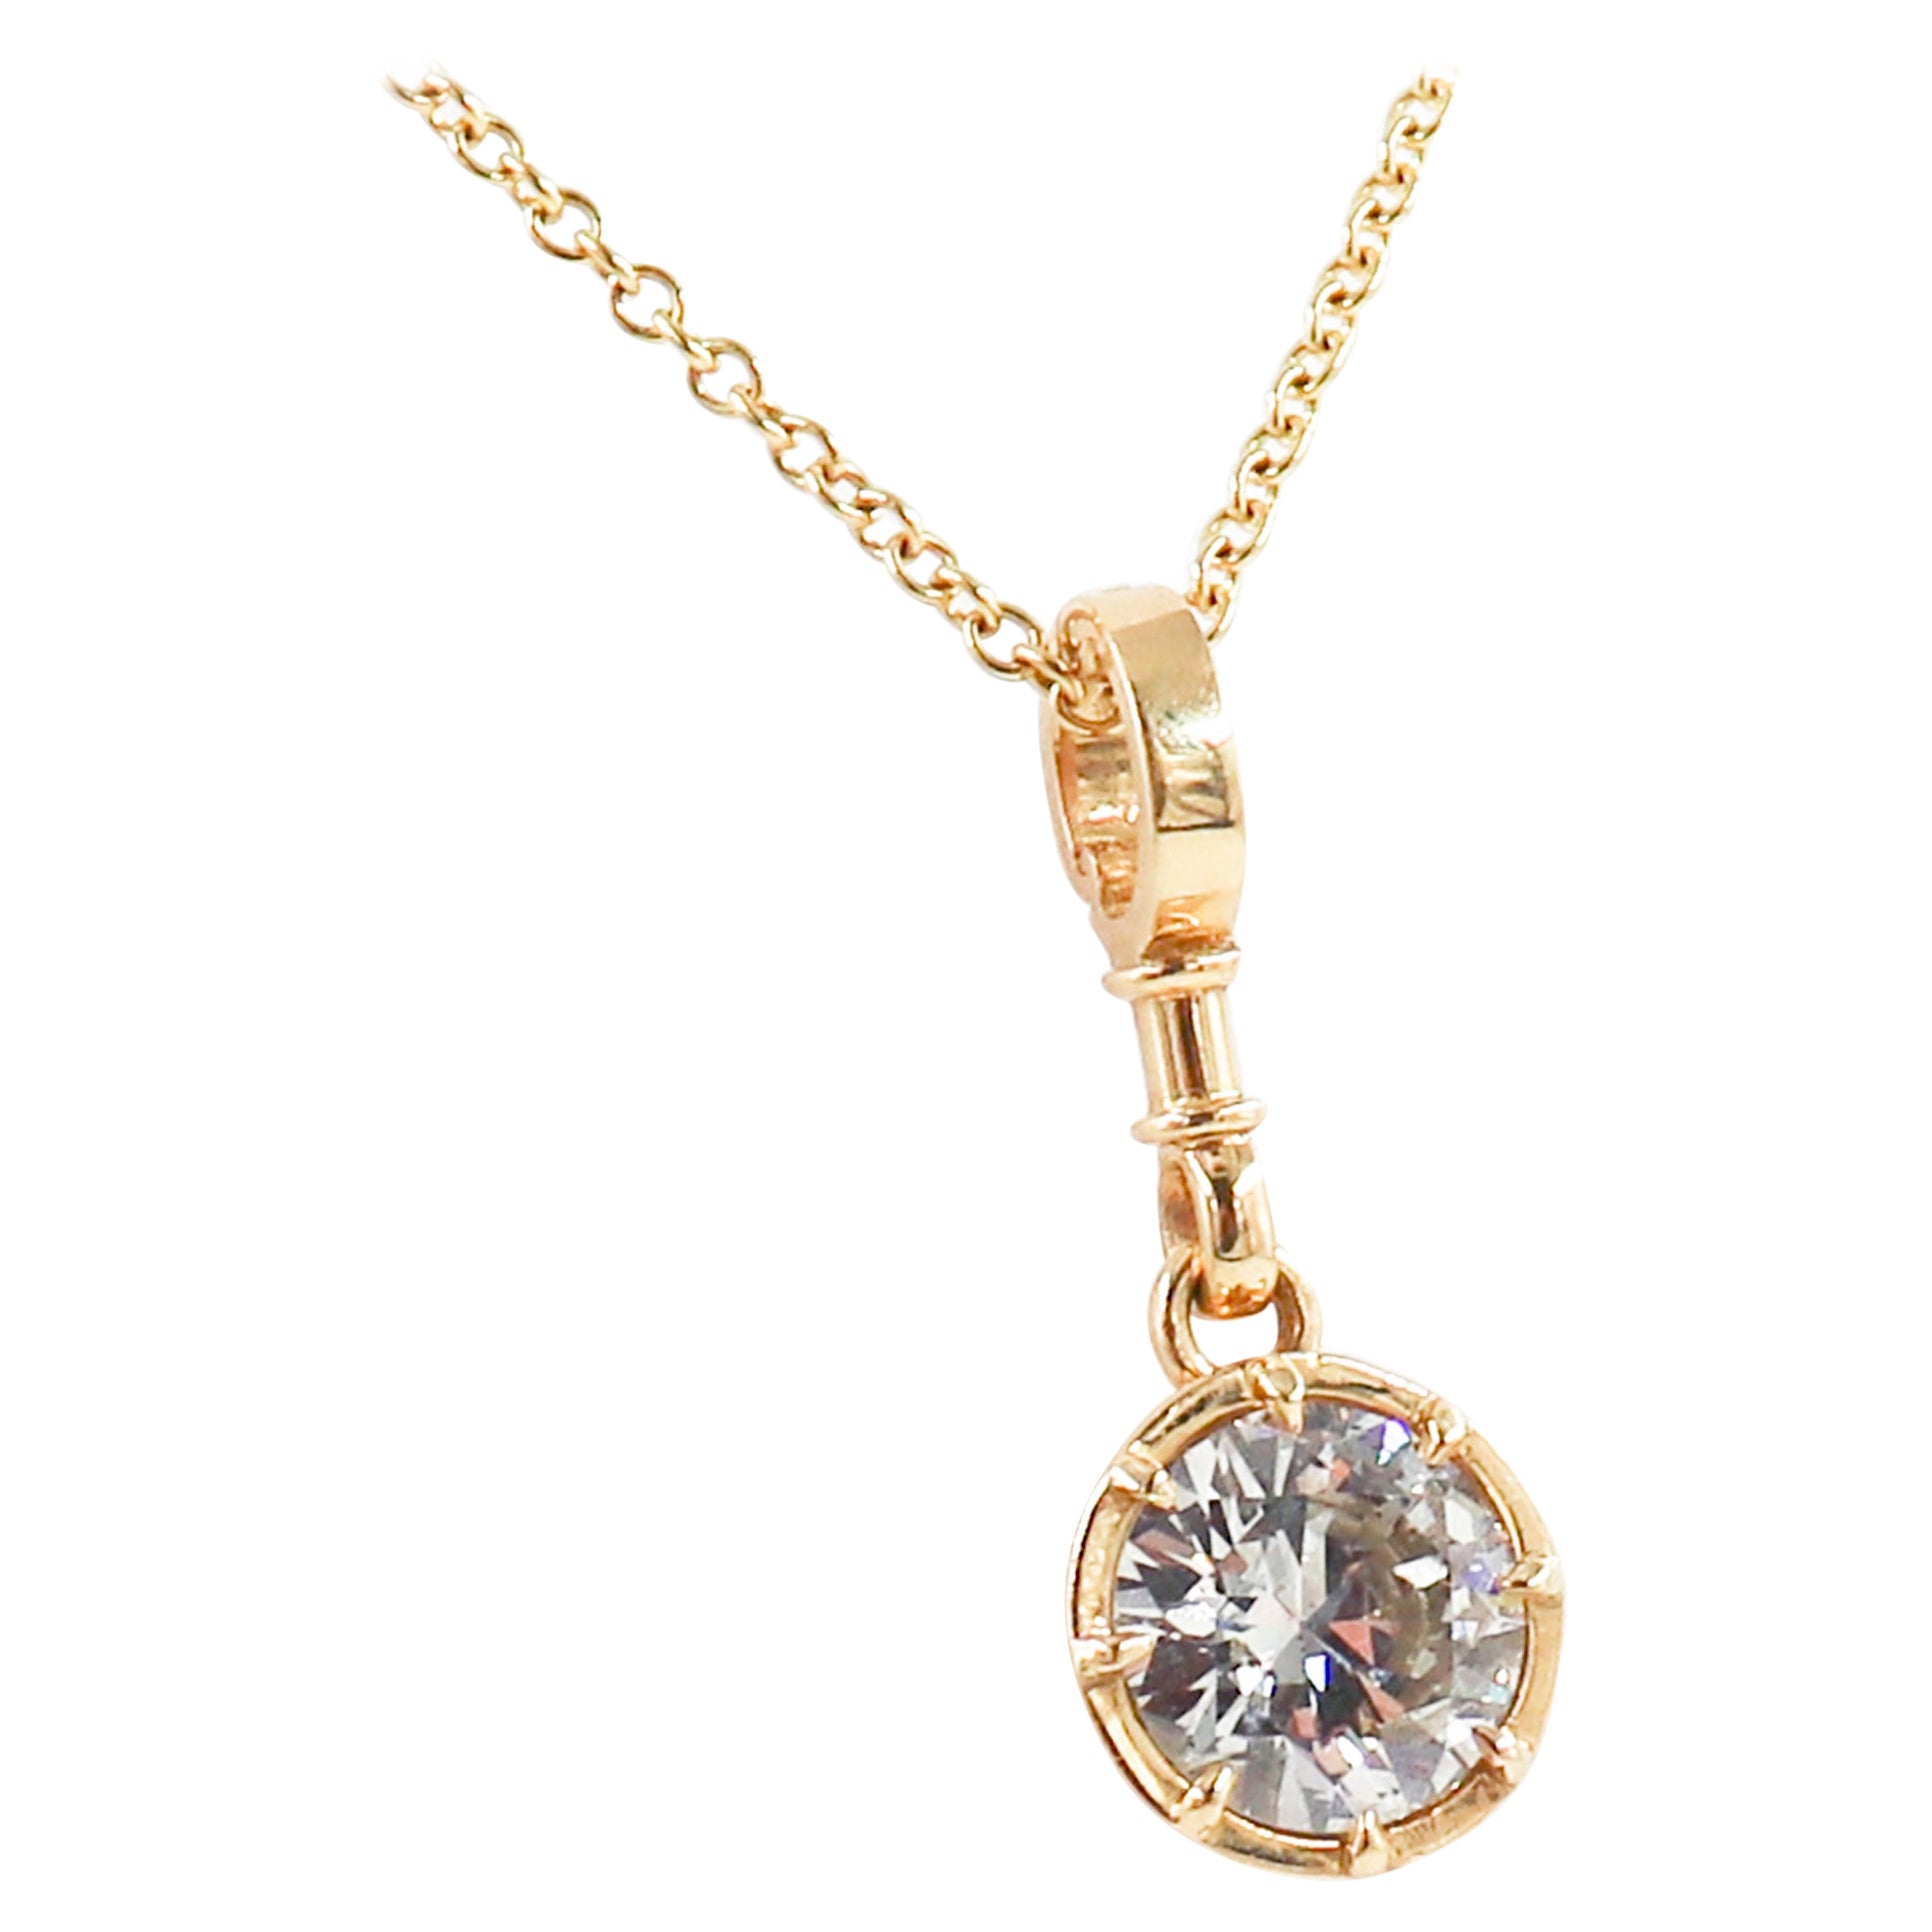 J. Birnbach 1.80 Carat Diamond and Yellow Gold Pendant Necklace